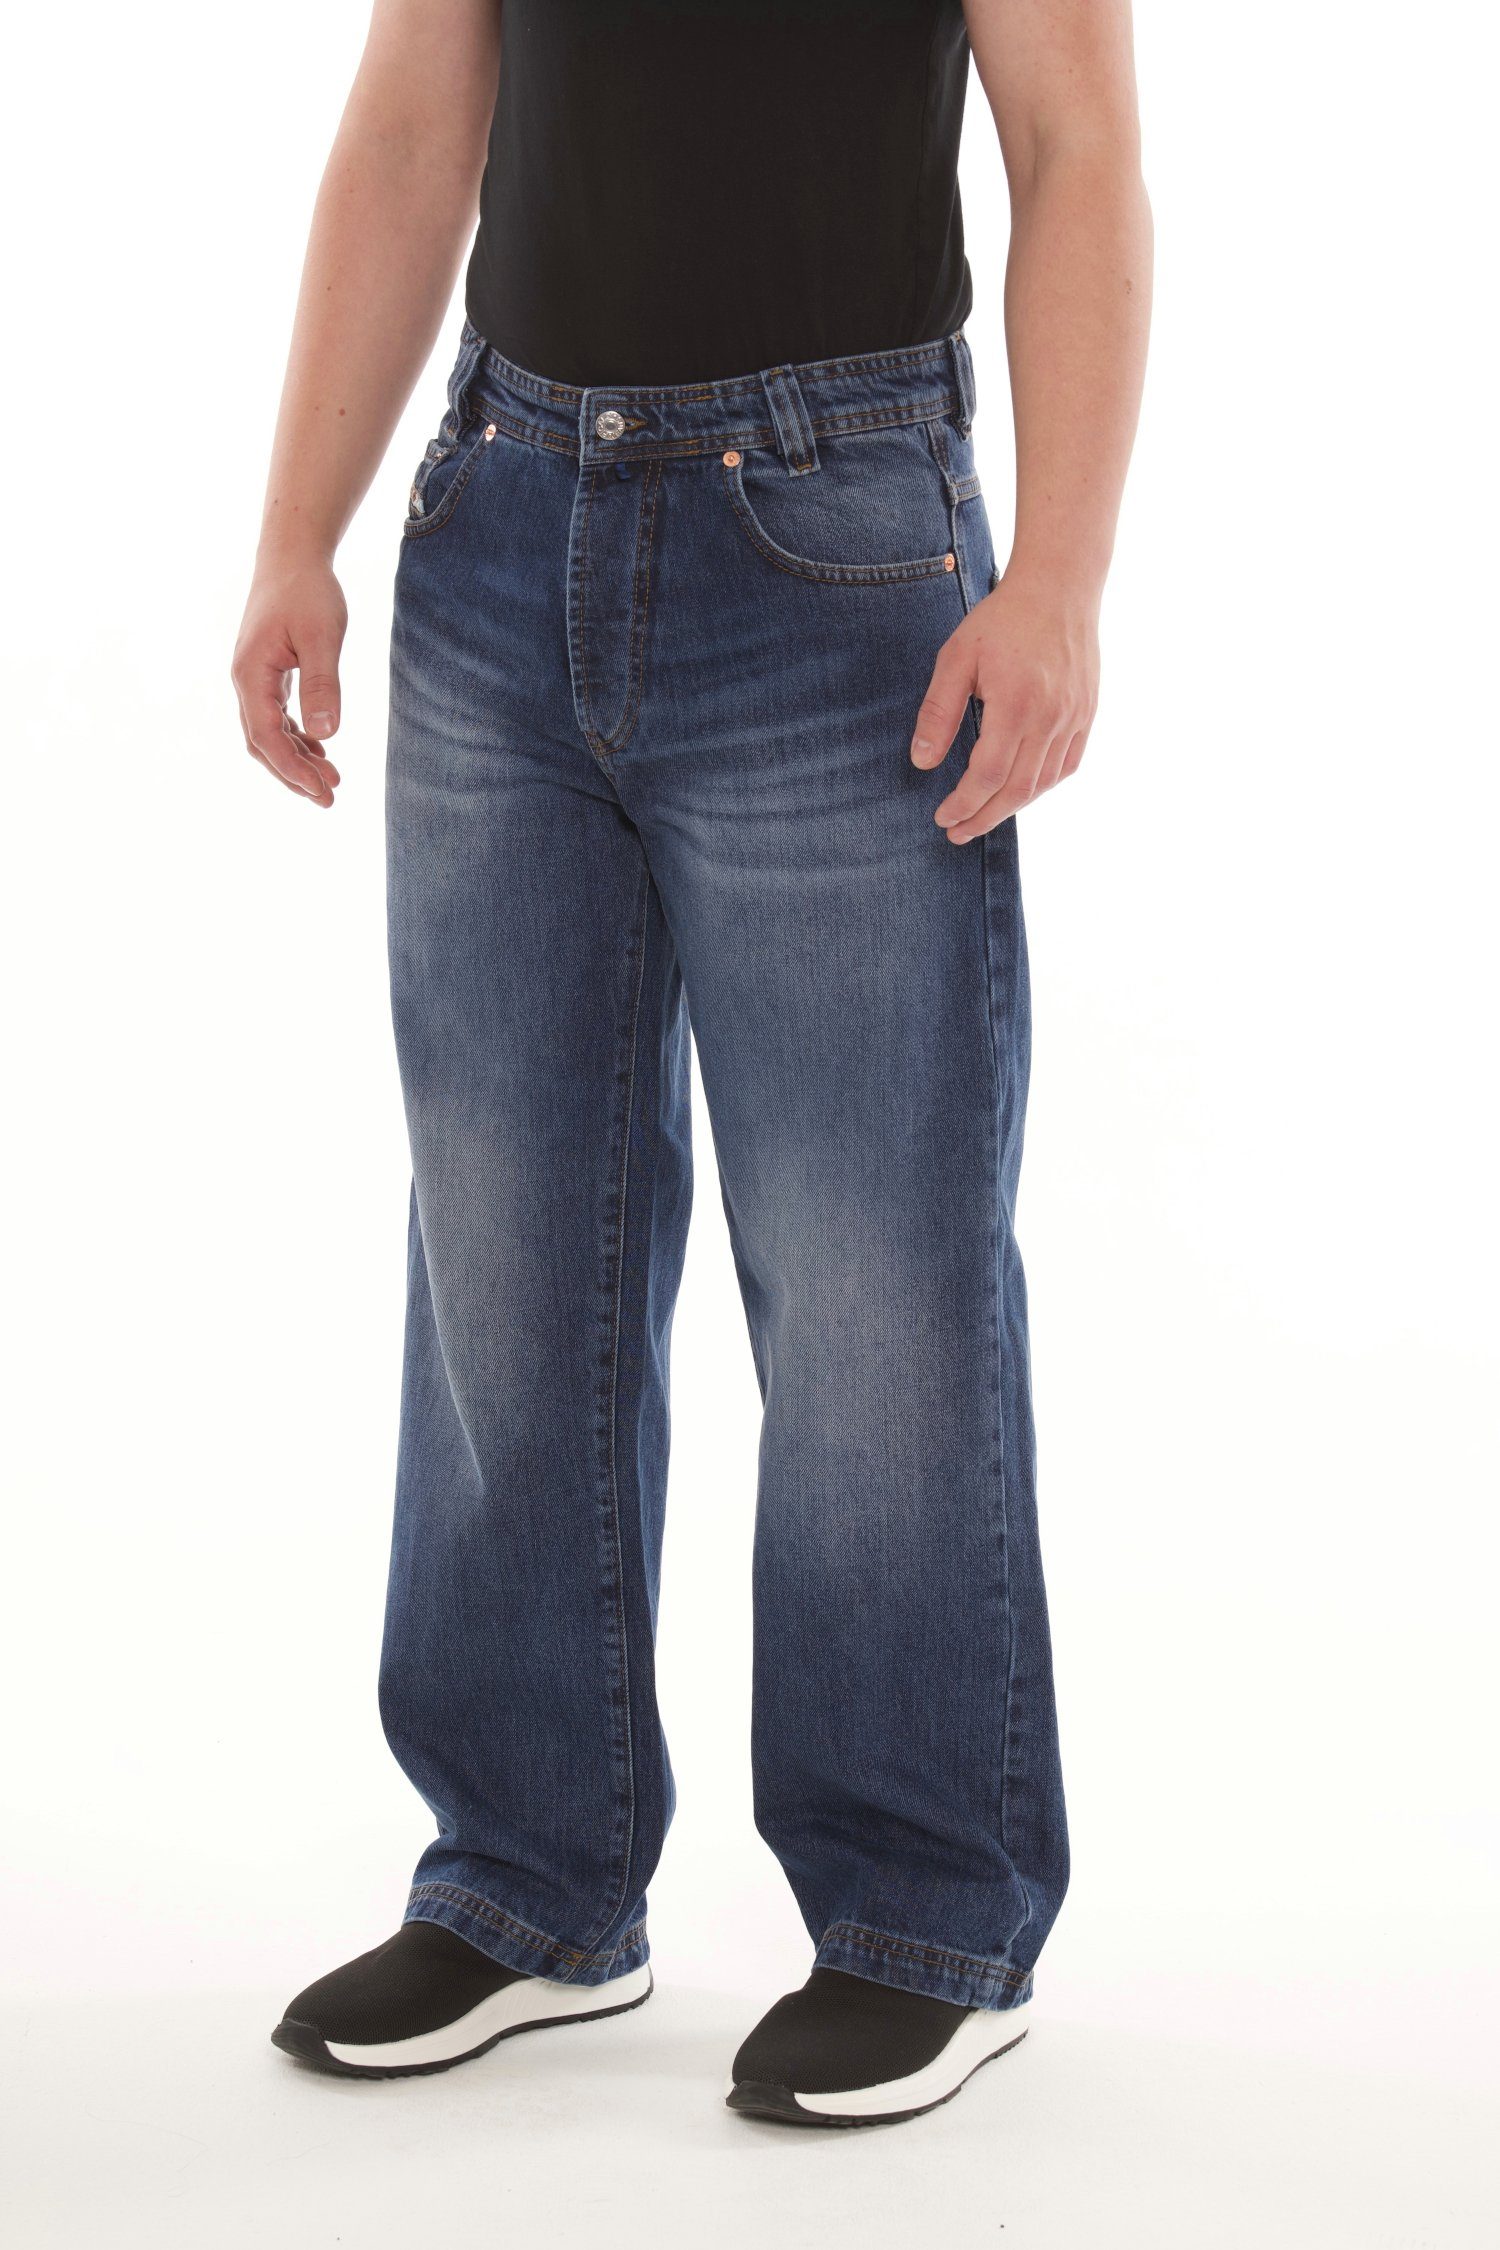 Weite lässiger Jeans Zicco 474 Schnitt Gerader Baggy Straight Leg, Fit, PICALDI Jeans Tindery